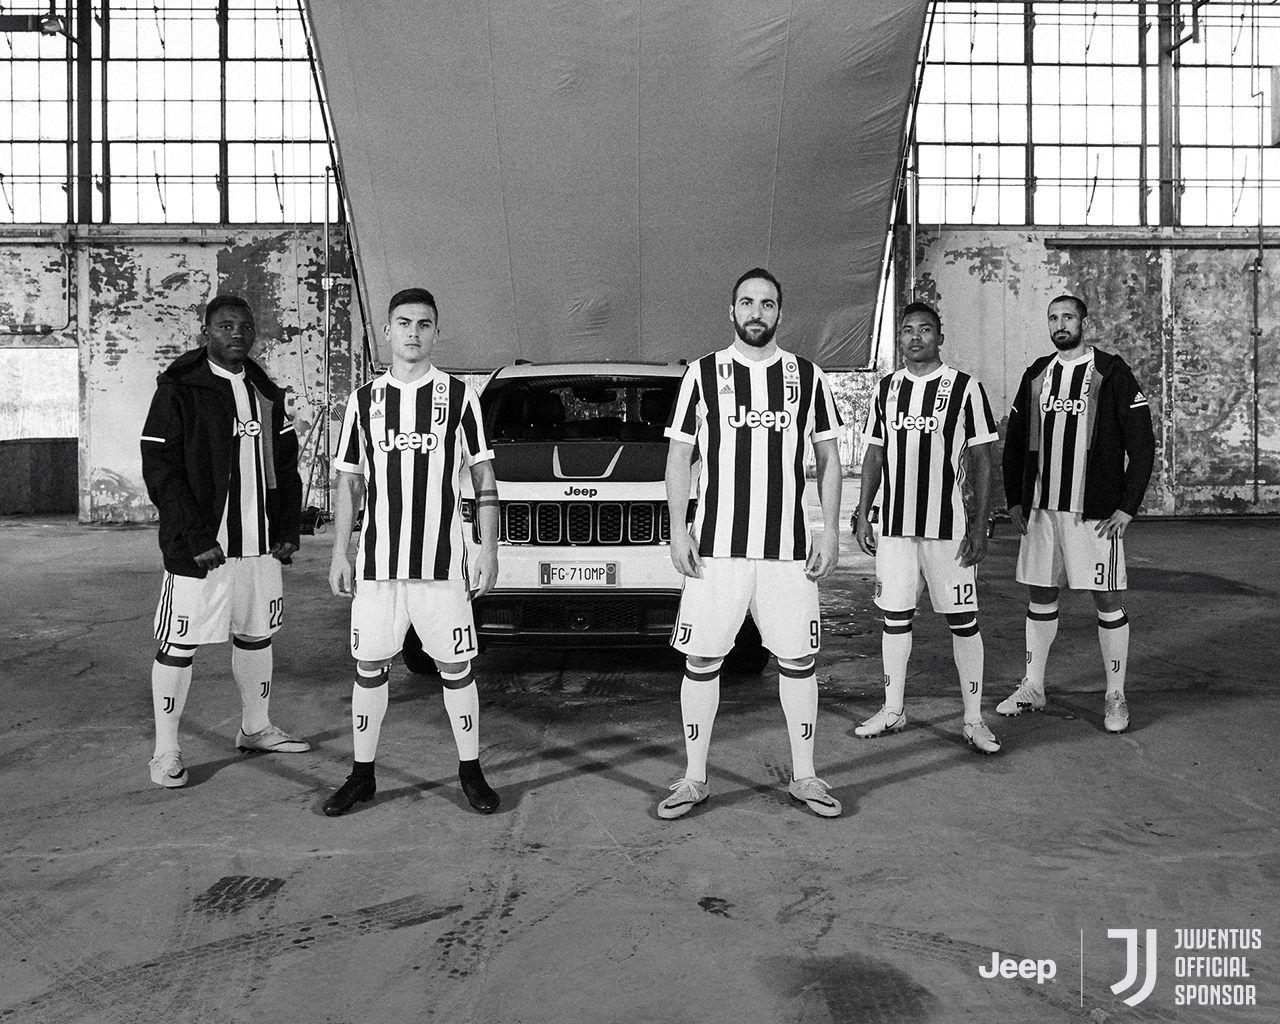 Jeep Brand Sponsors Juventus Football Club